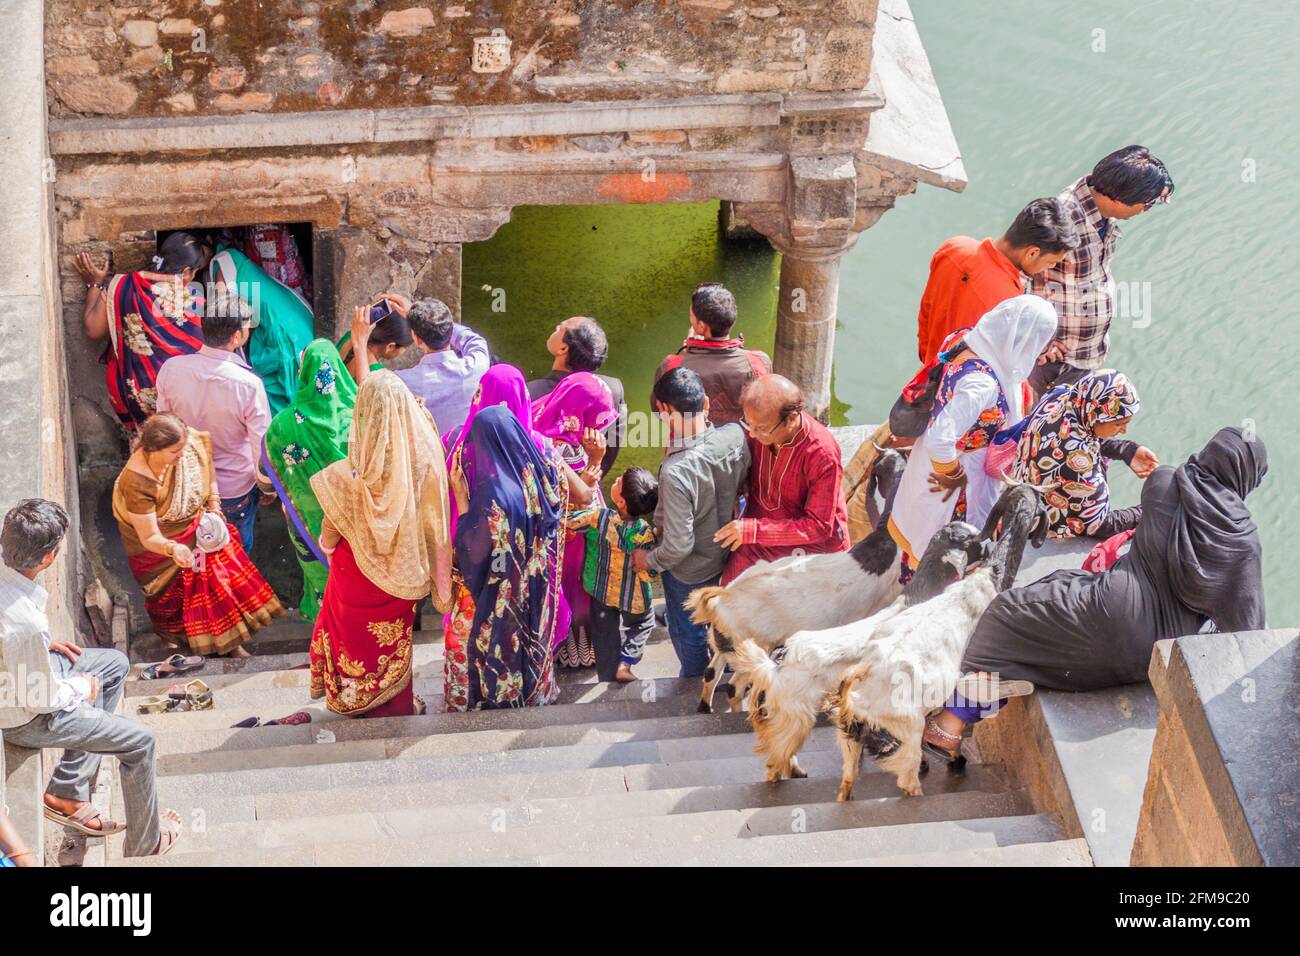 CHITTORGARH, INDIA - FEBRUARY 15, 2017: People at Gaumukh reservoir at Chittor Fort in Chittorgarh, Rajasthan state, India Stock Photo